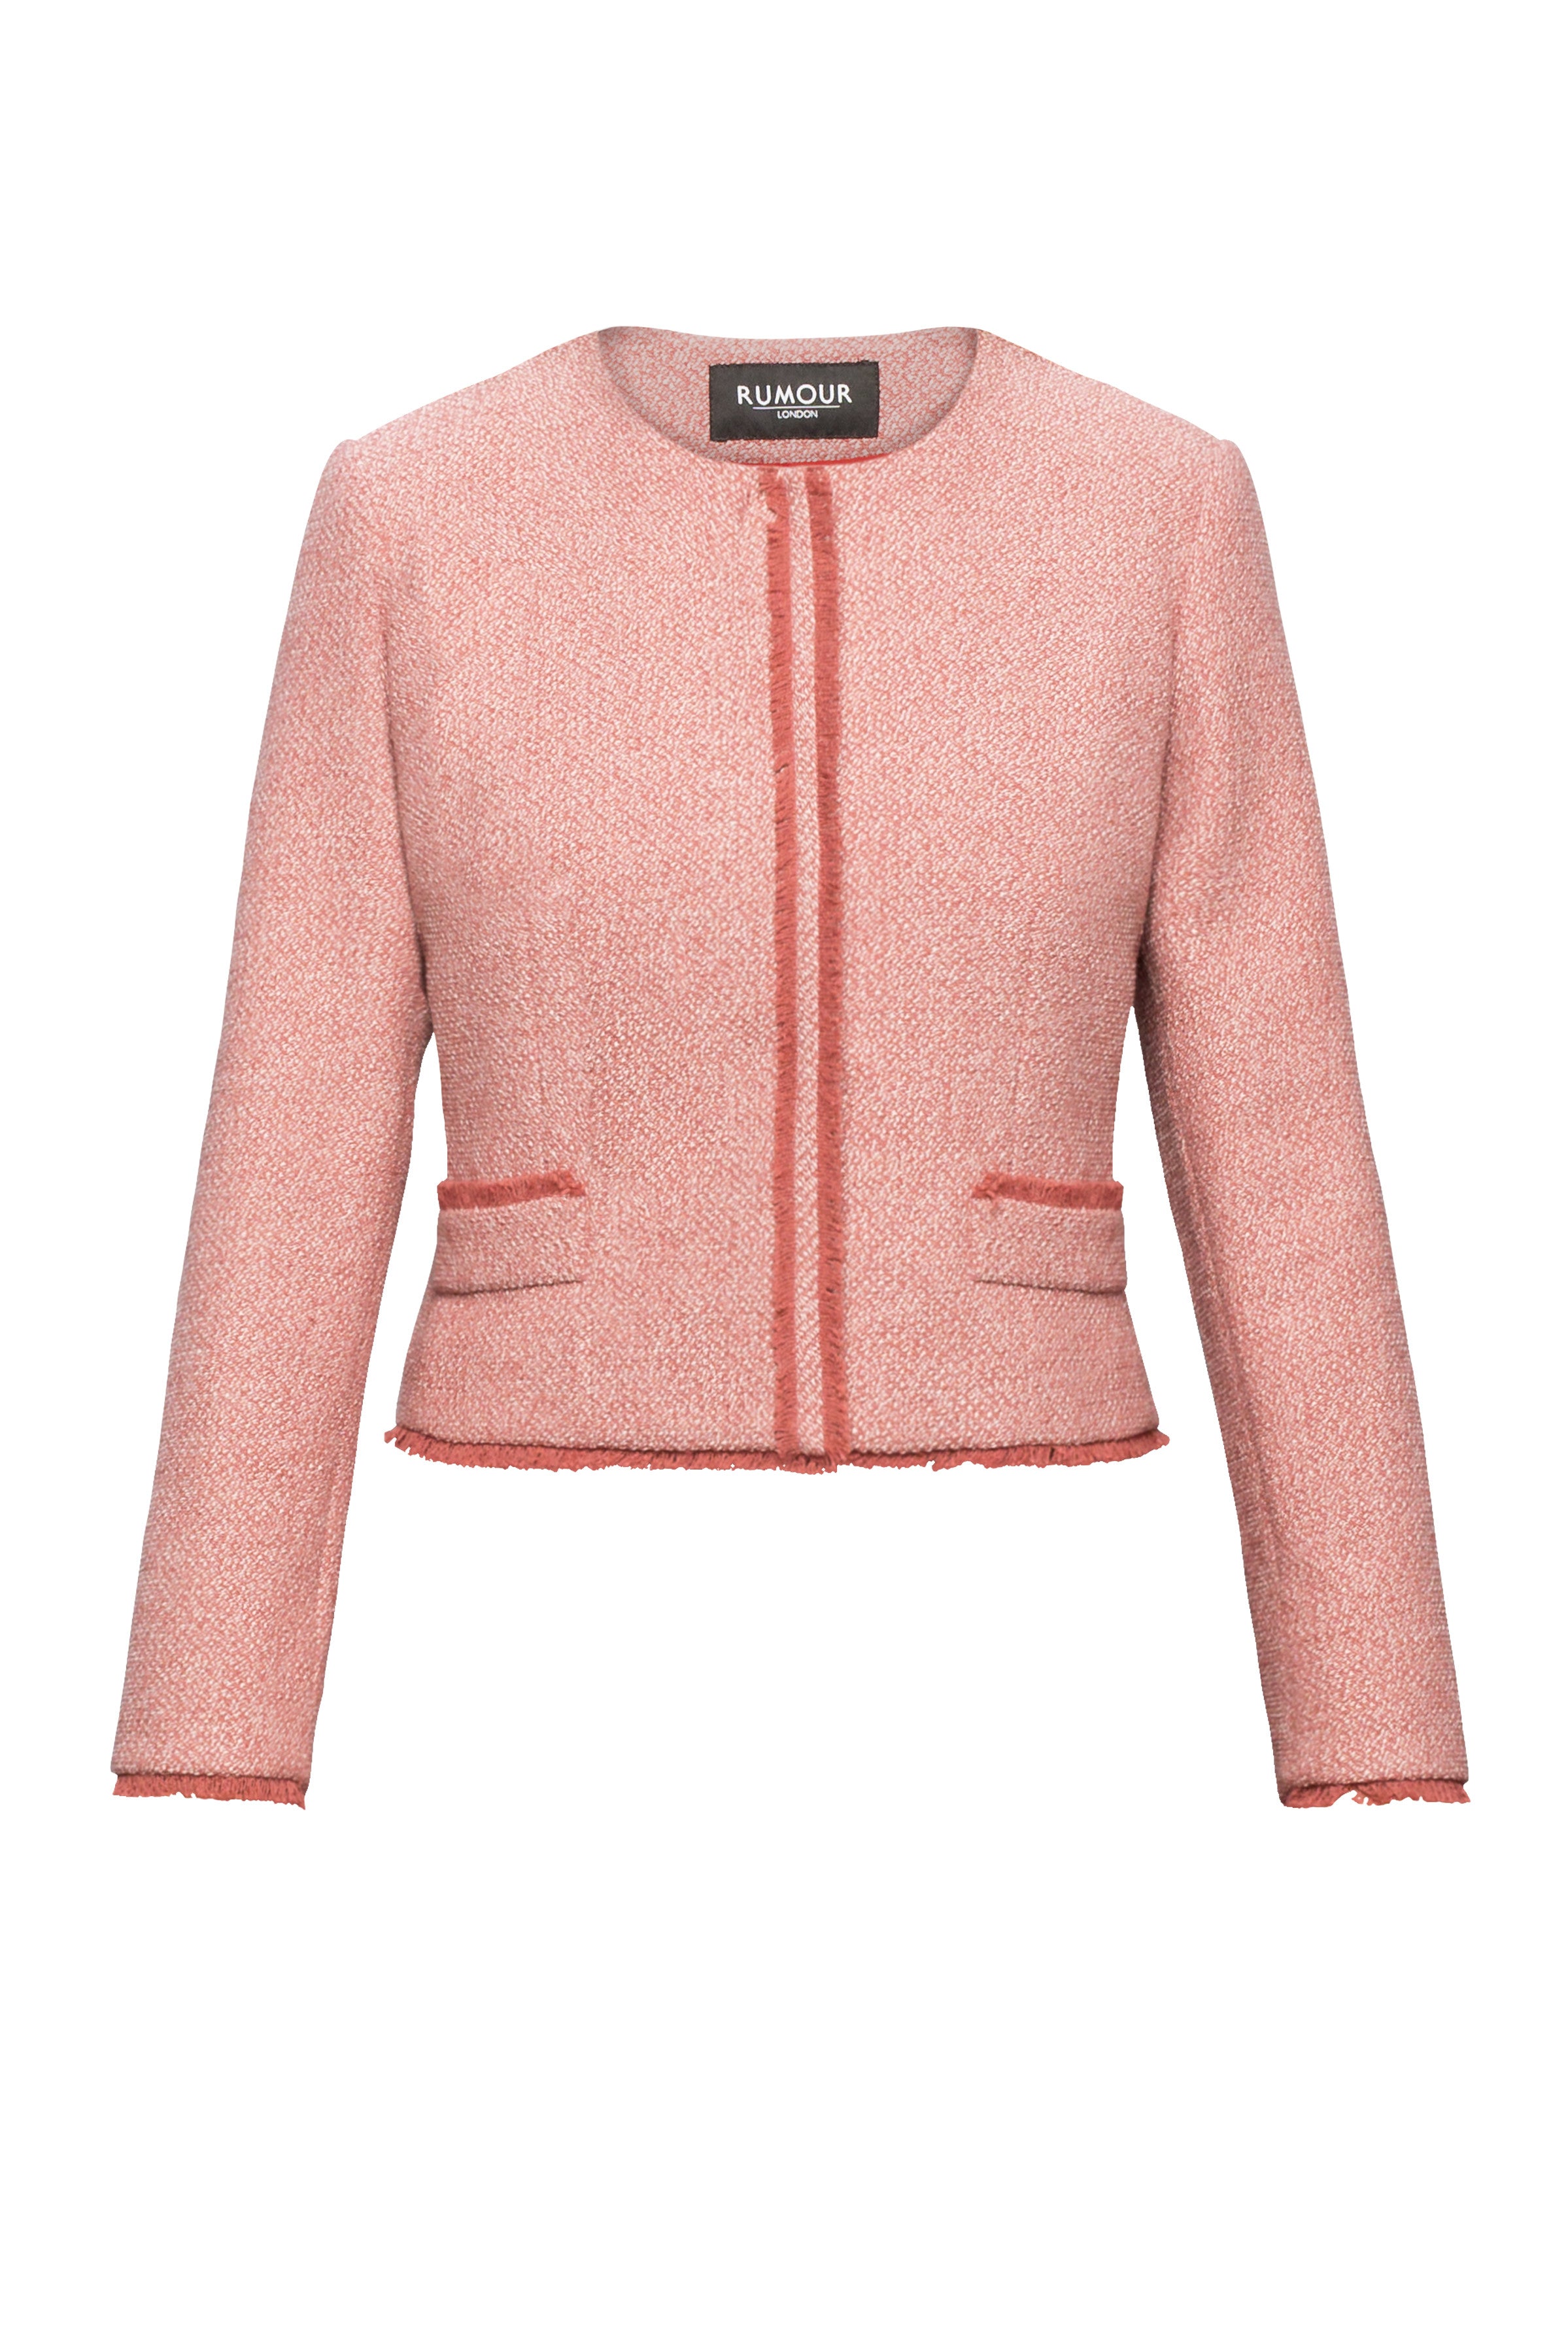 Soft Pink Tweed Jacket With Fringing Detail